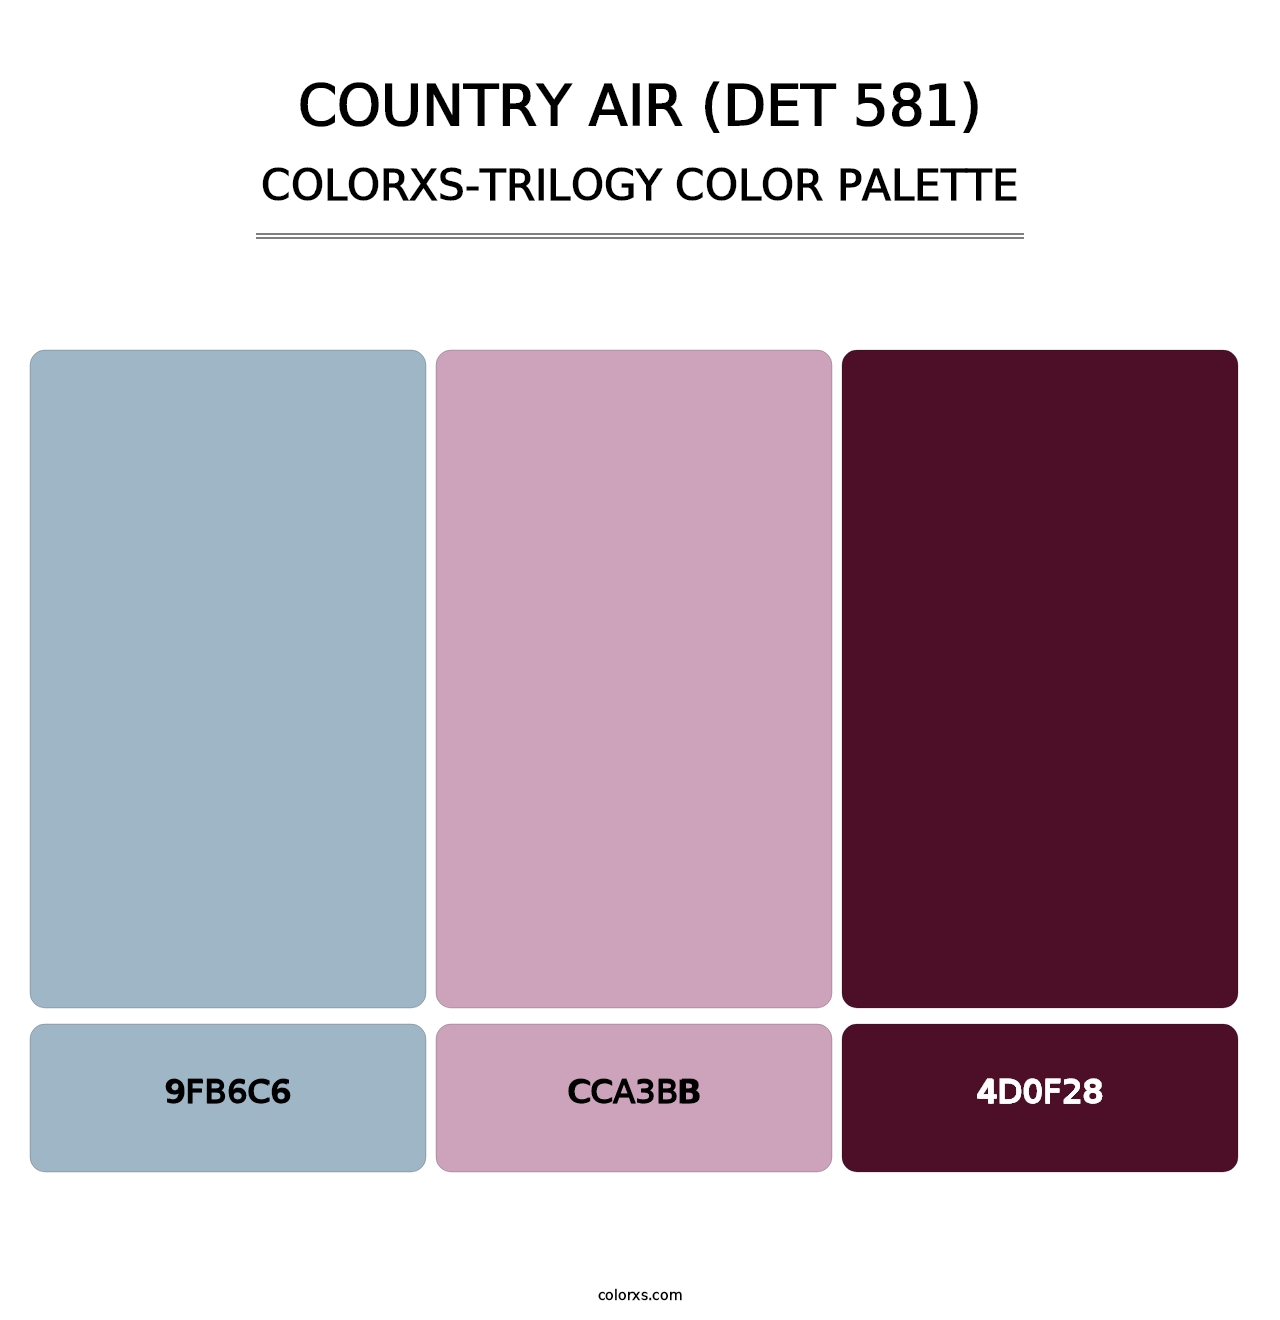 Country Air (DET 581) - Colorxs Trilogy Palette